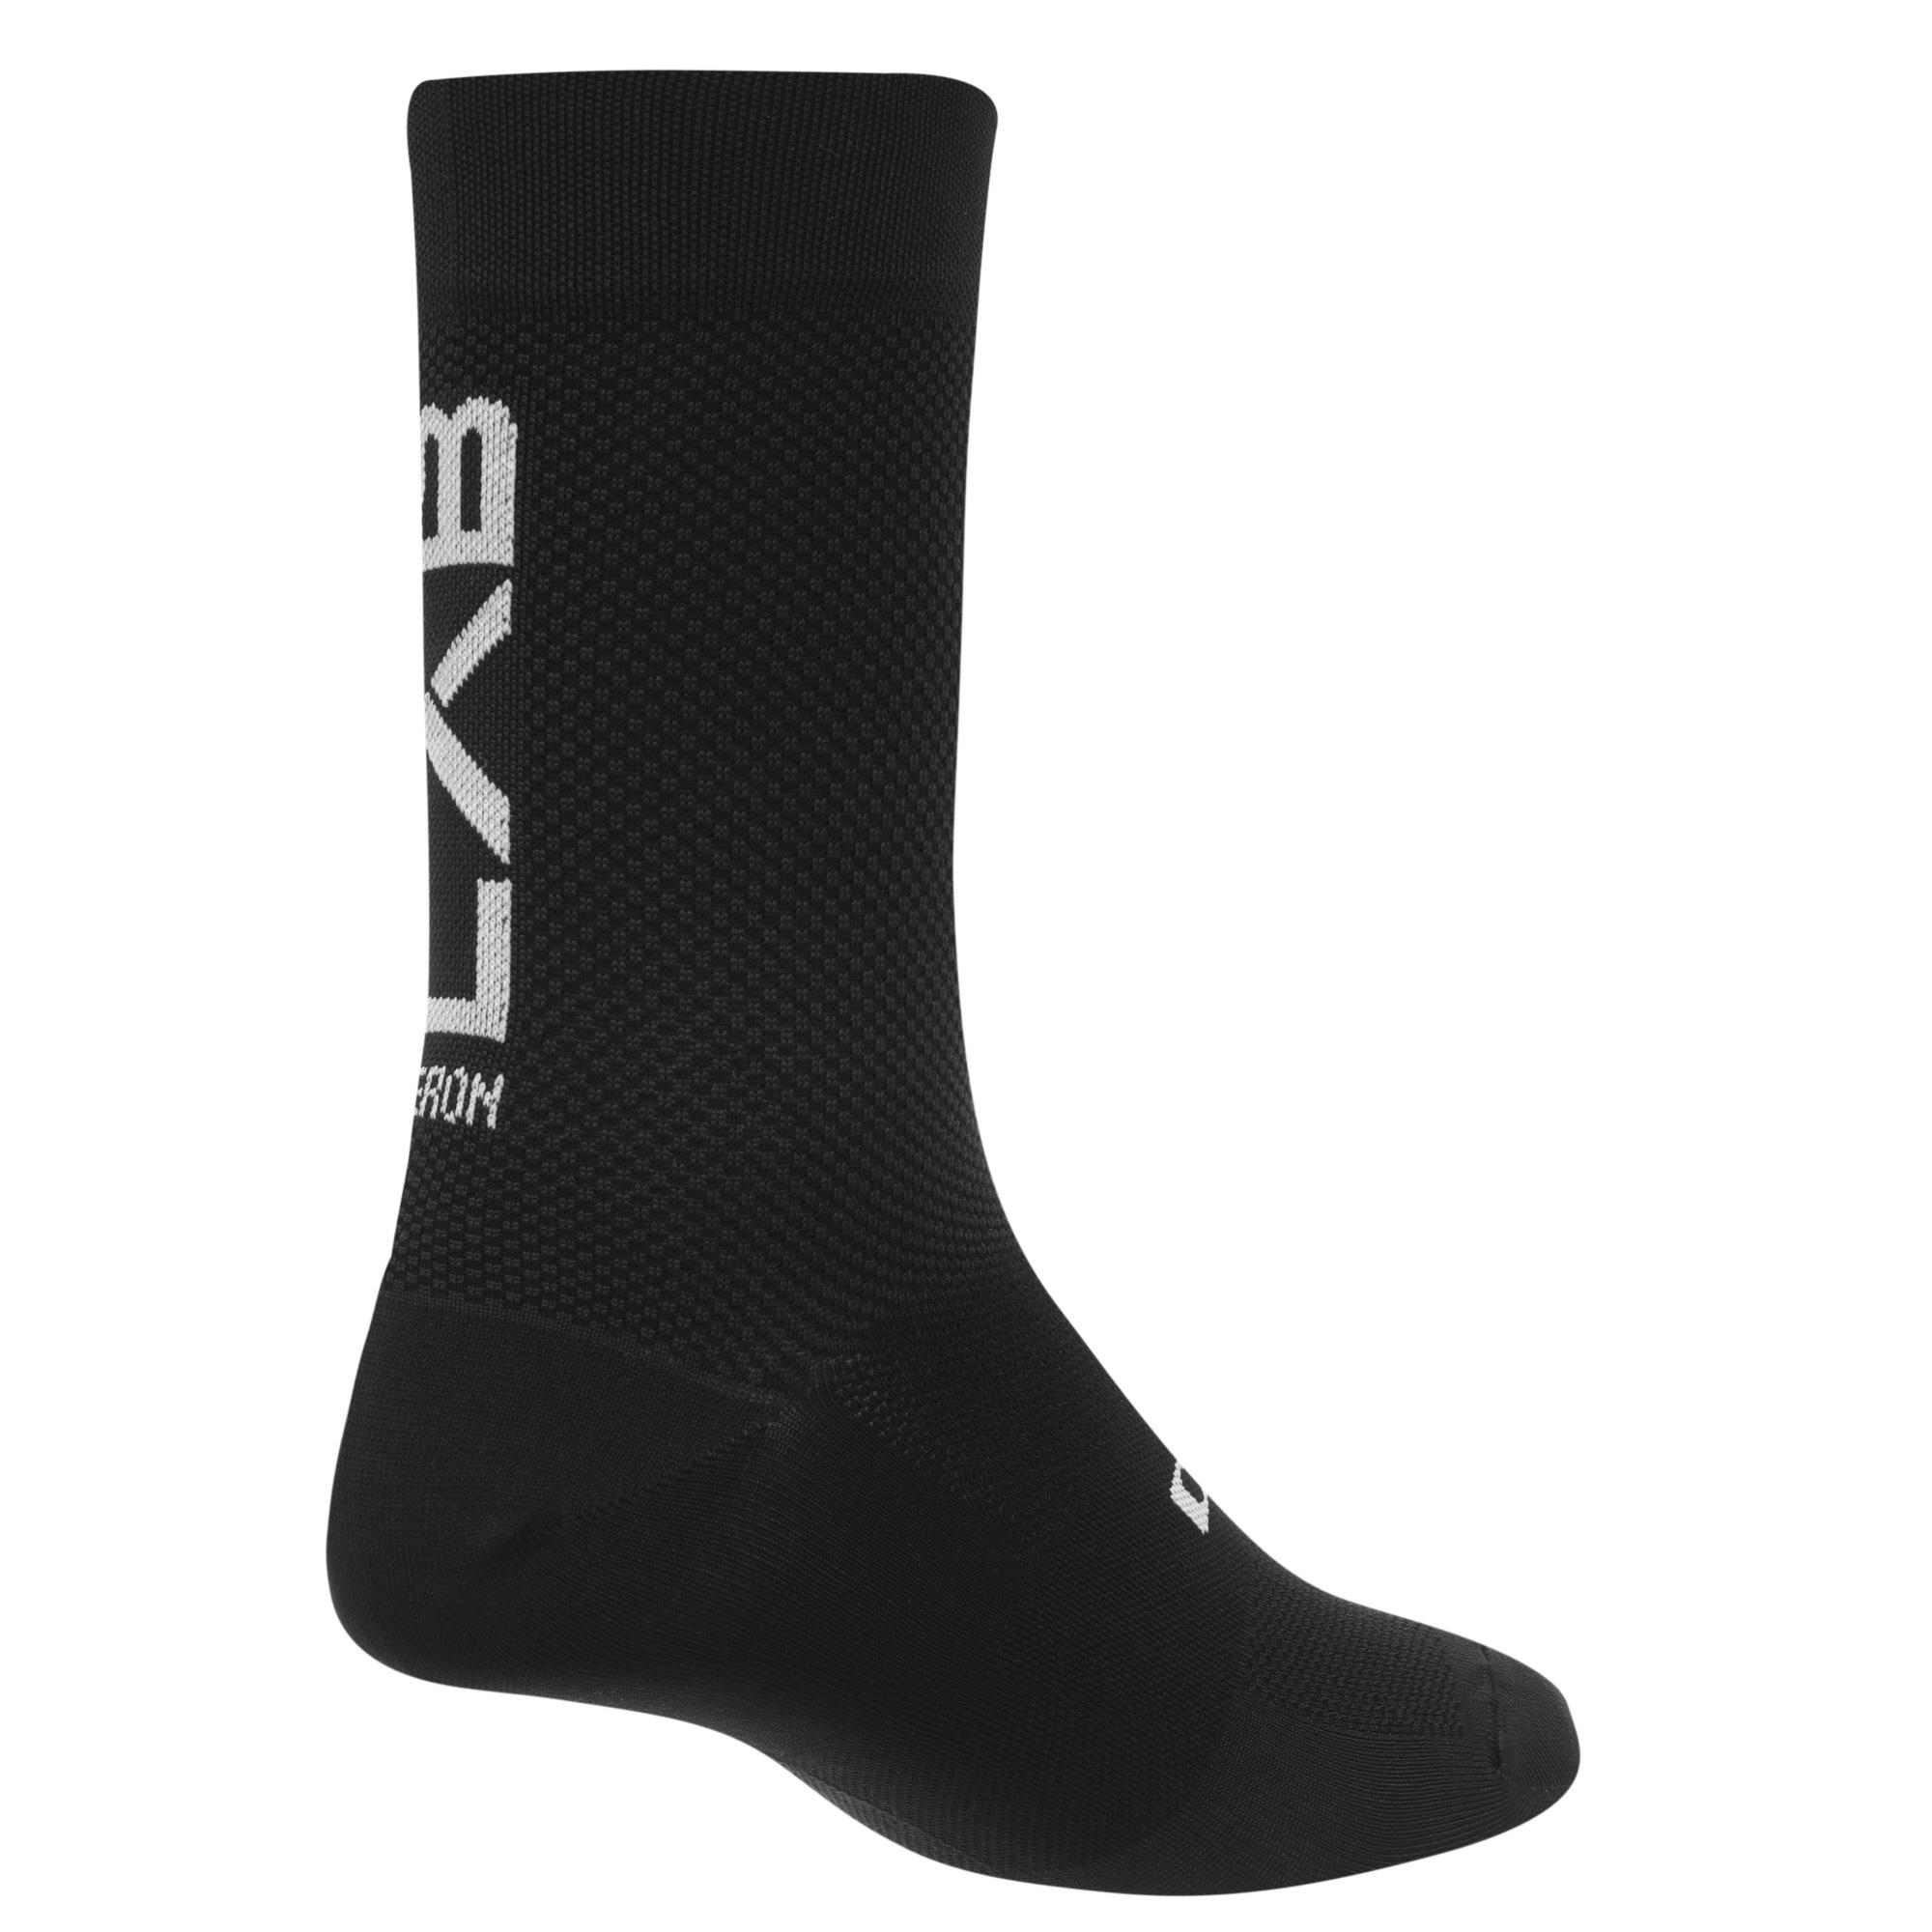 Dhb Aeron Lab Sock - Black/white